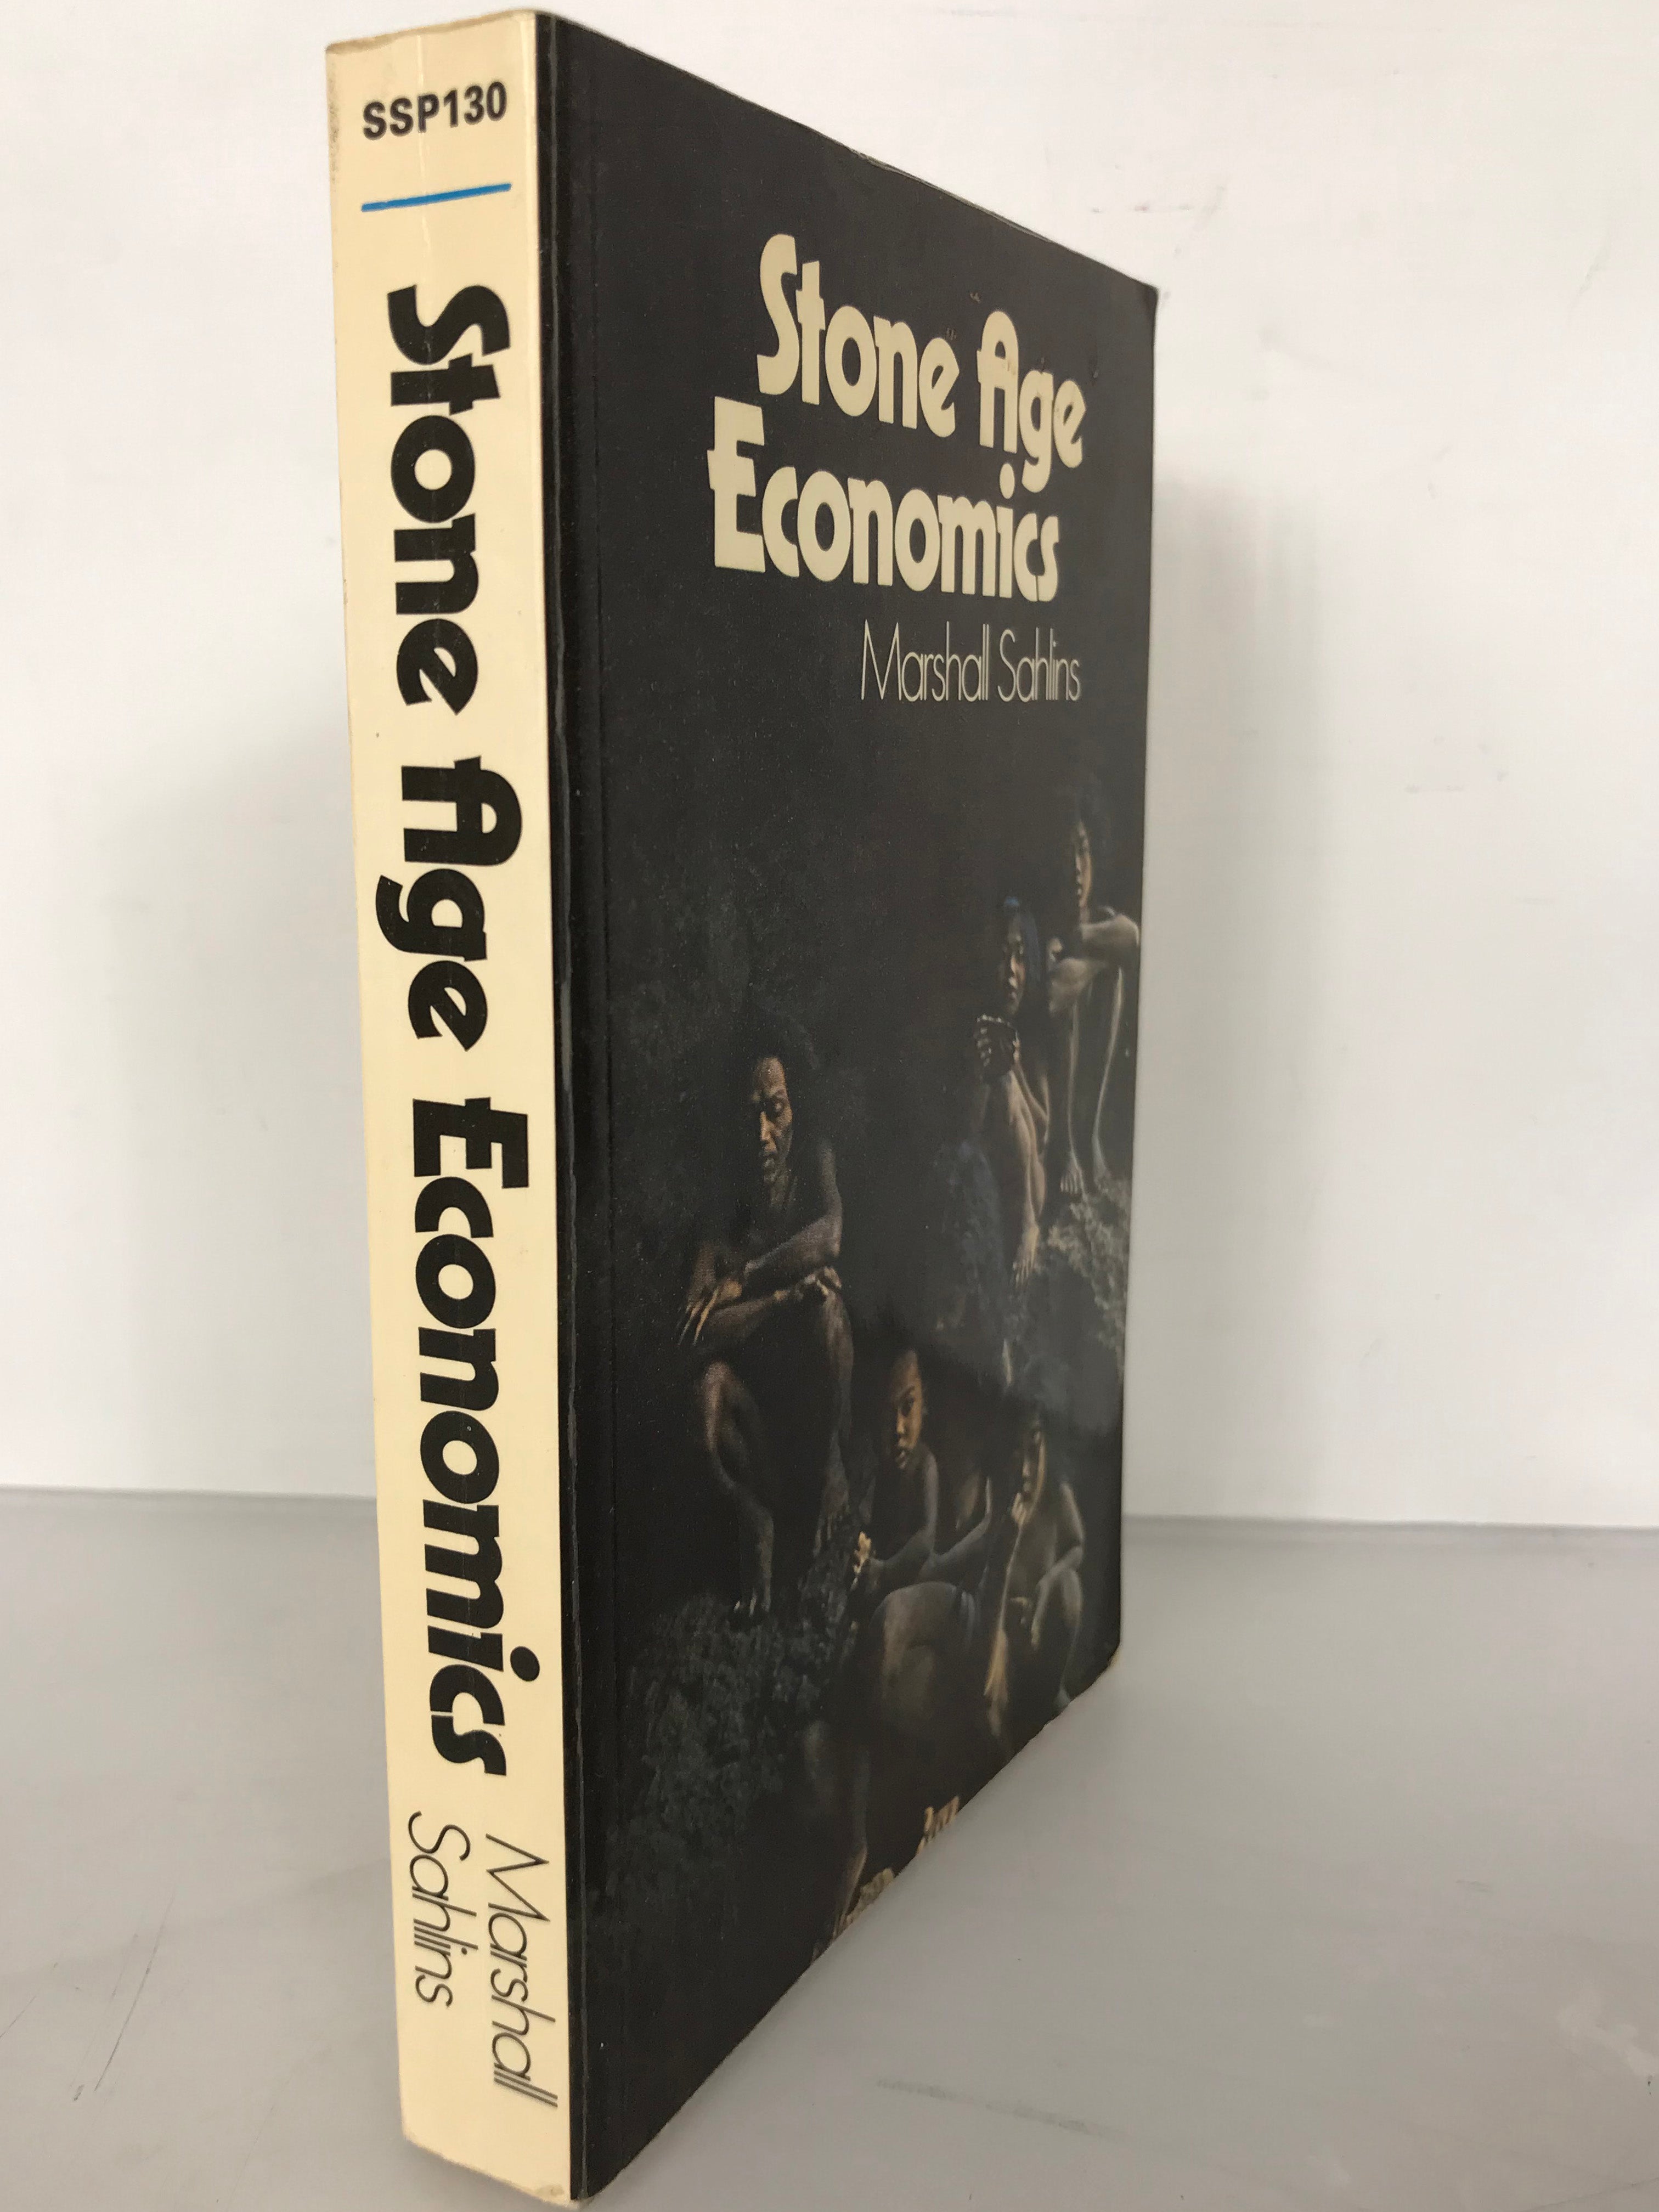 Stone Age Economics by Marshall Sahlins 1972 PB